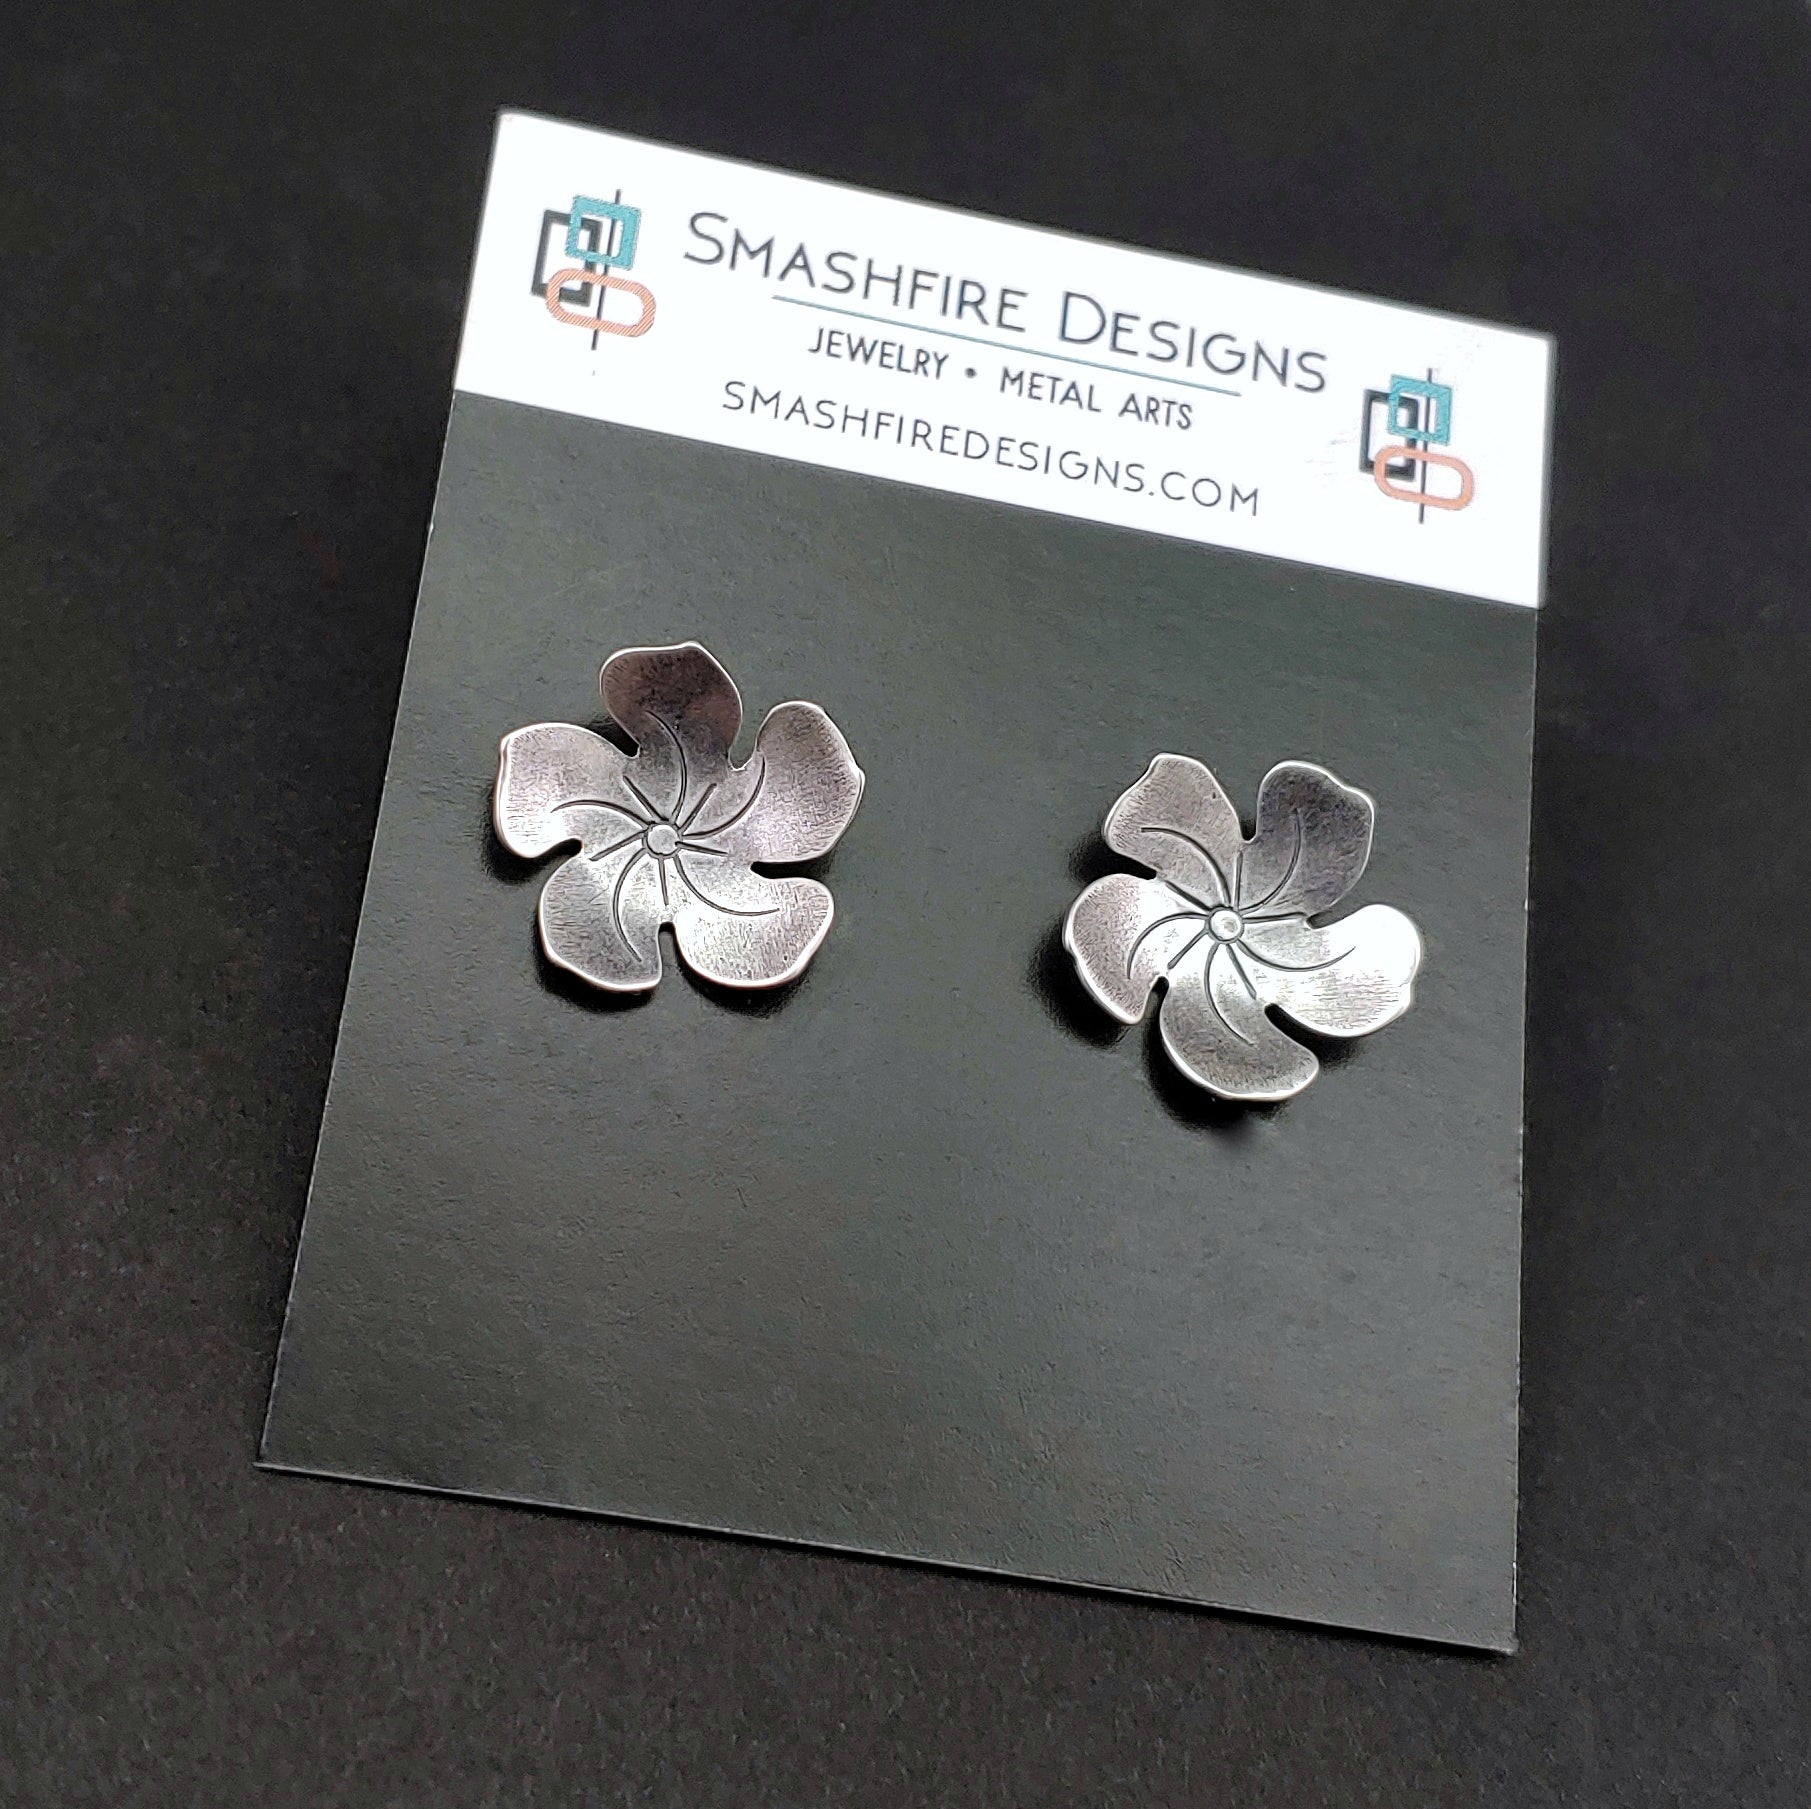 sterling silver studs on smashfire designs earring card